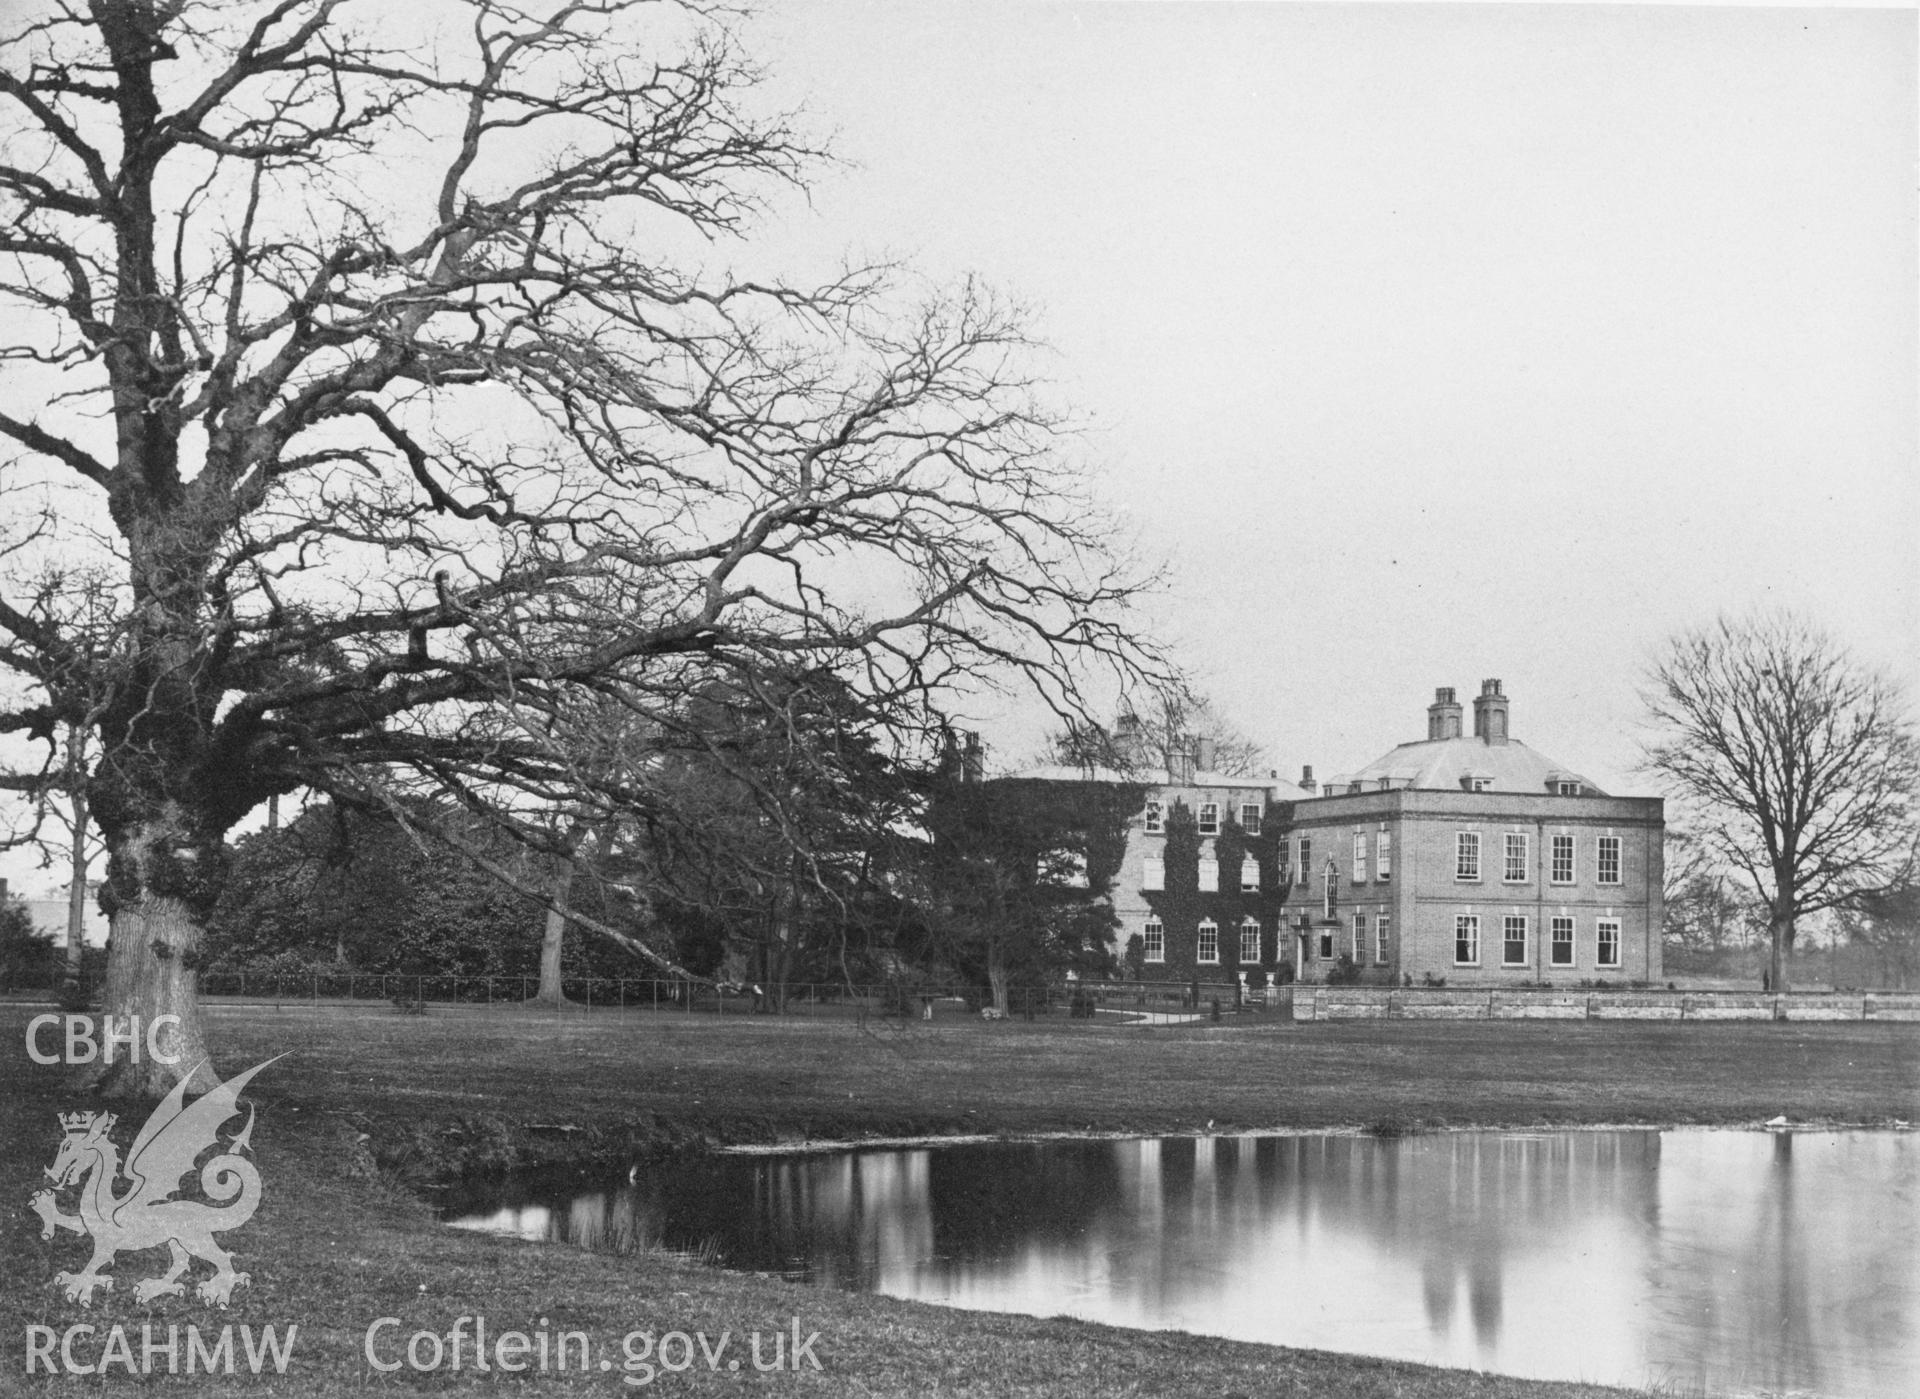 Digital copy of an acetate negative showing exterior view of Iscoyd Park, Flintshire.